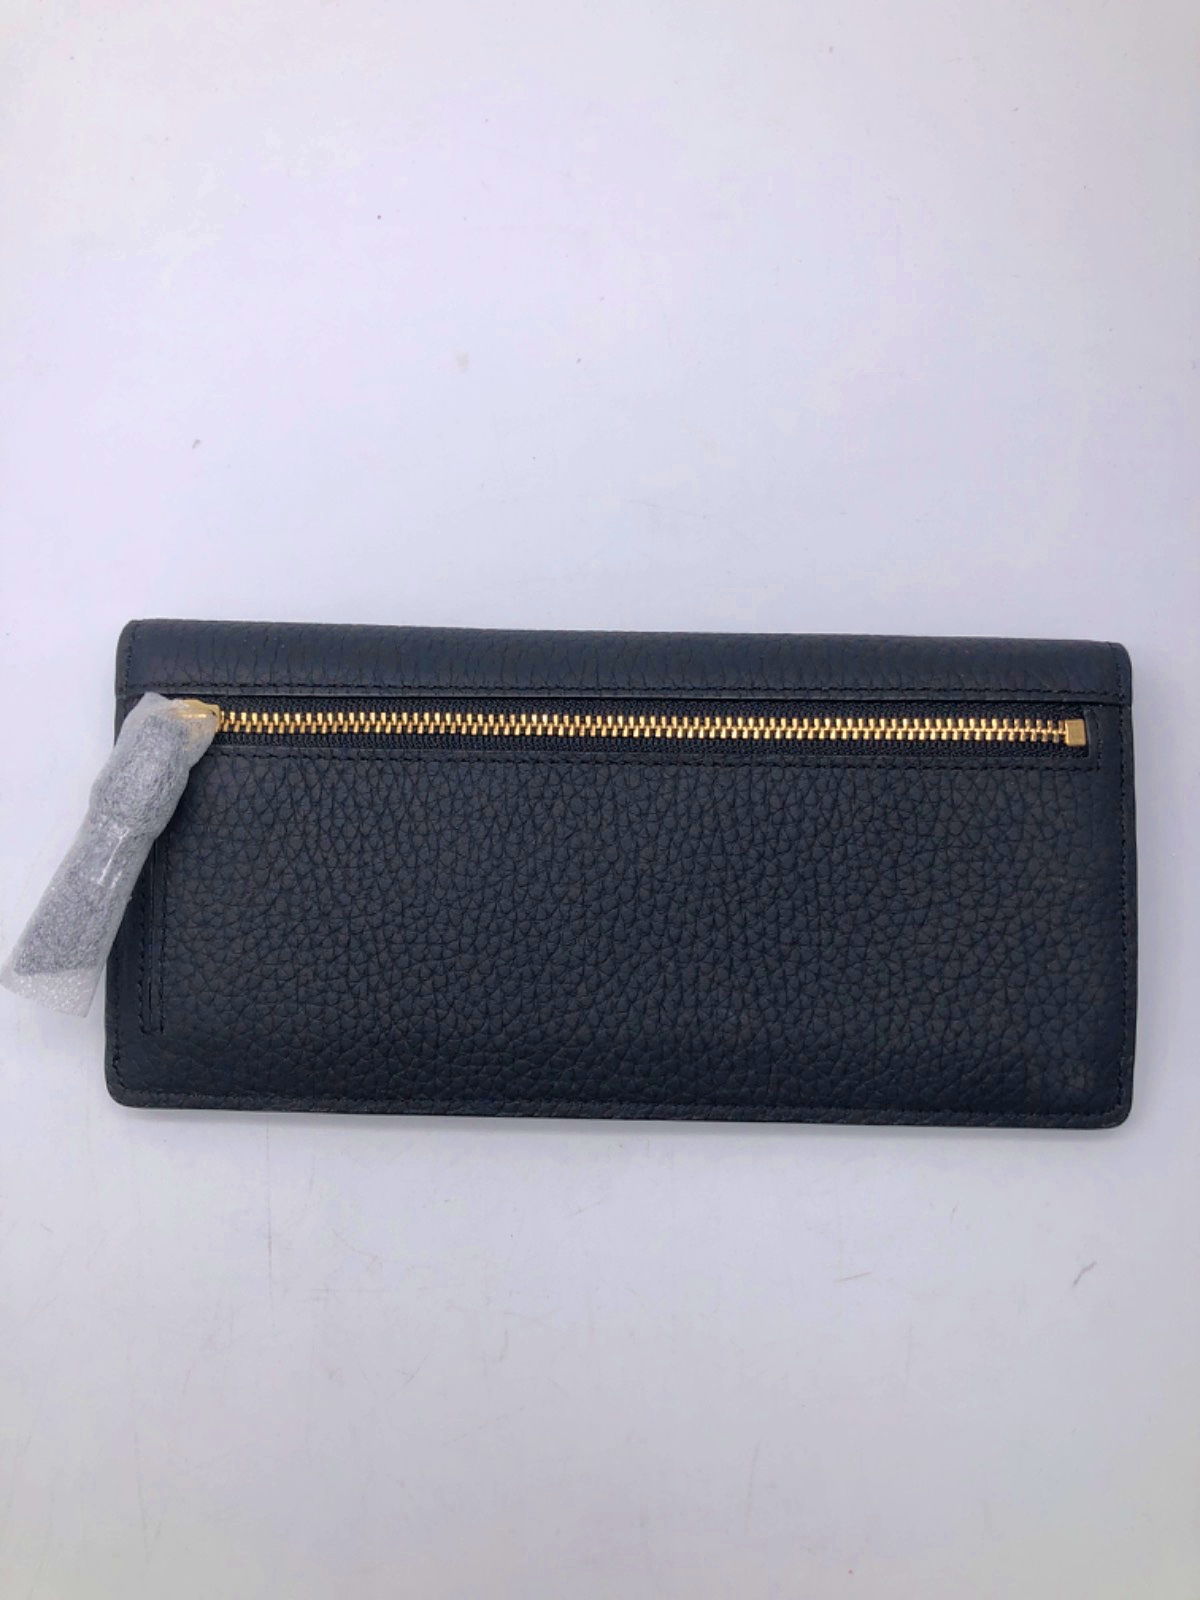 Kate Spade Black leather Wallet purse / clutch bag